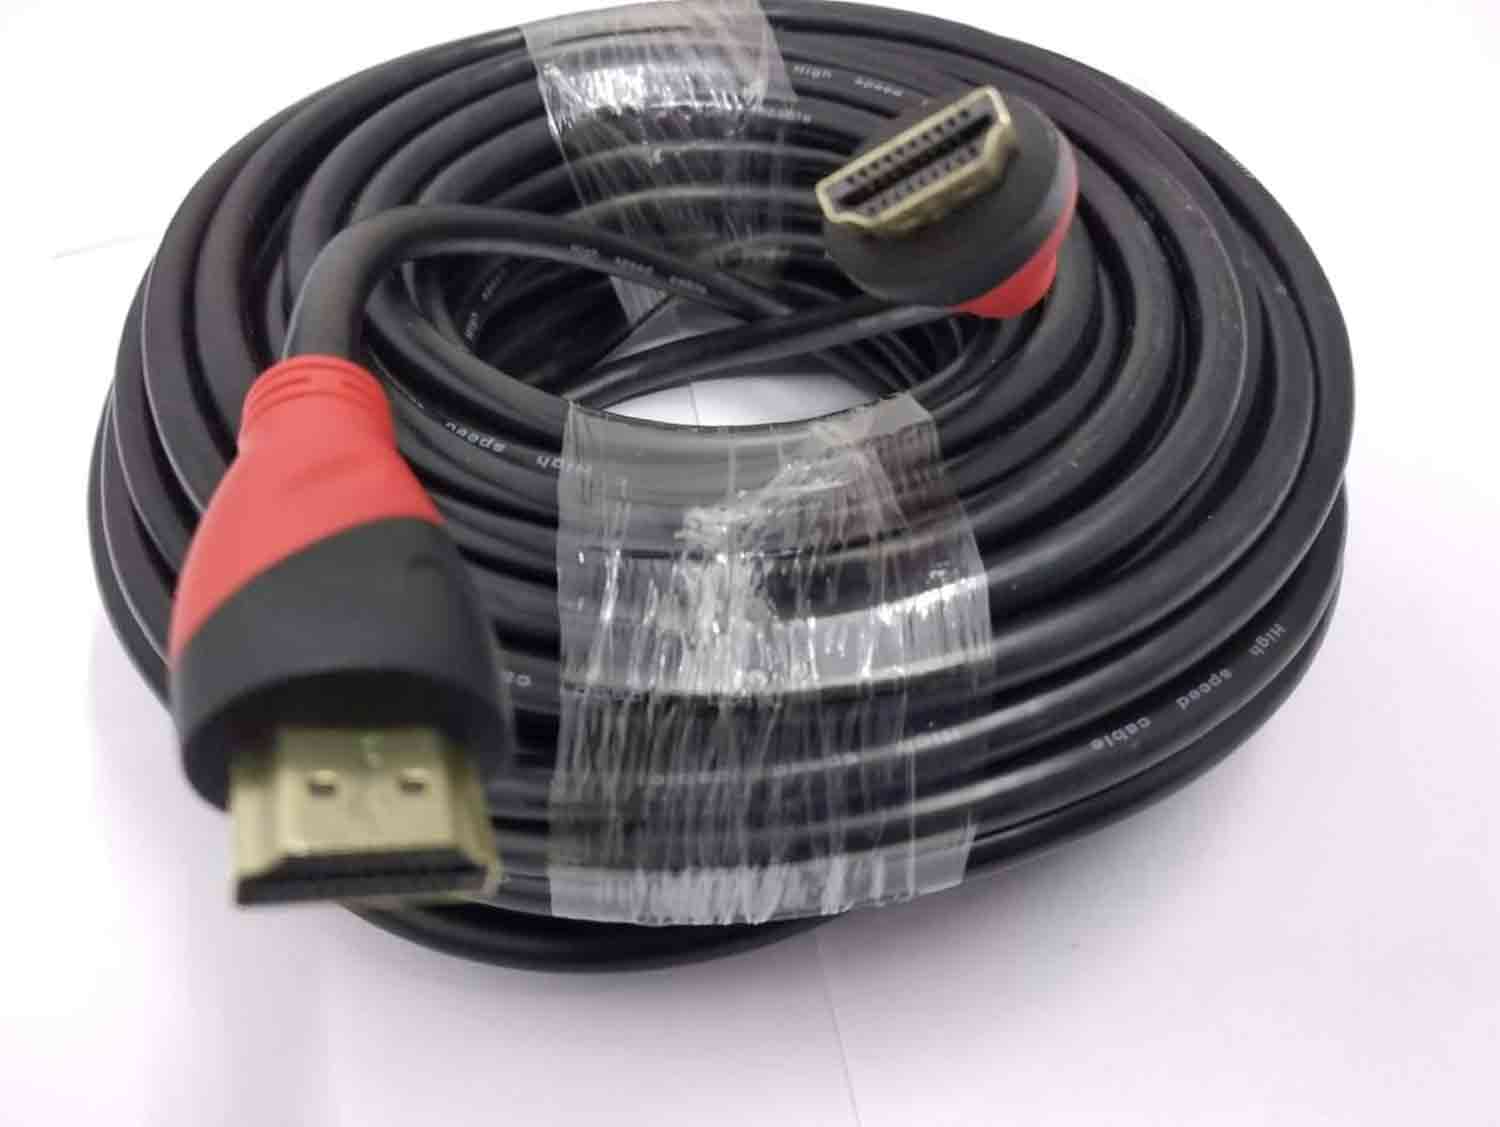 HDMI 2.0v 4K Cable 20 Meter - VCOM used in a wedding setup